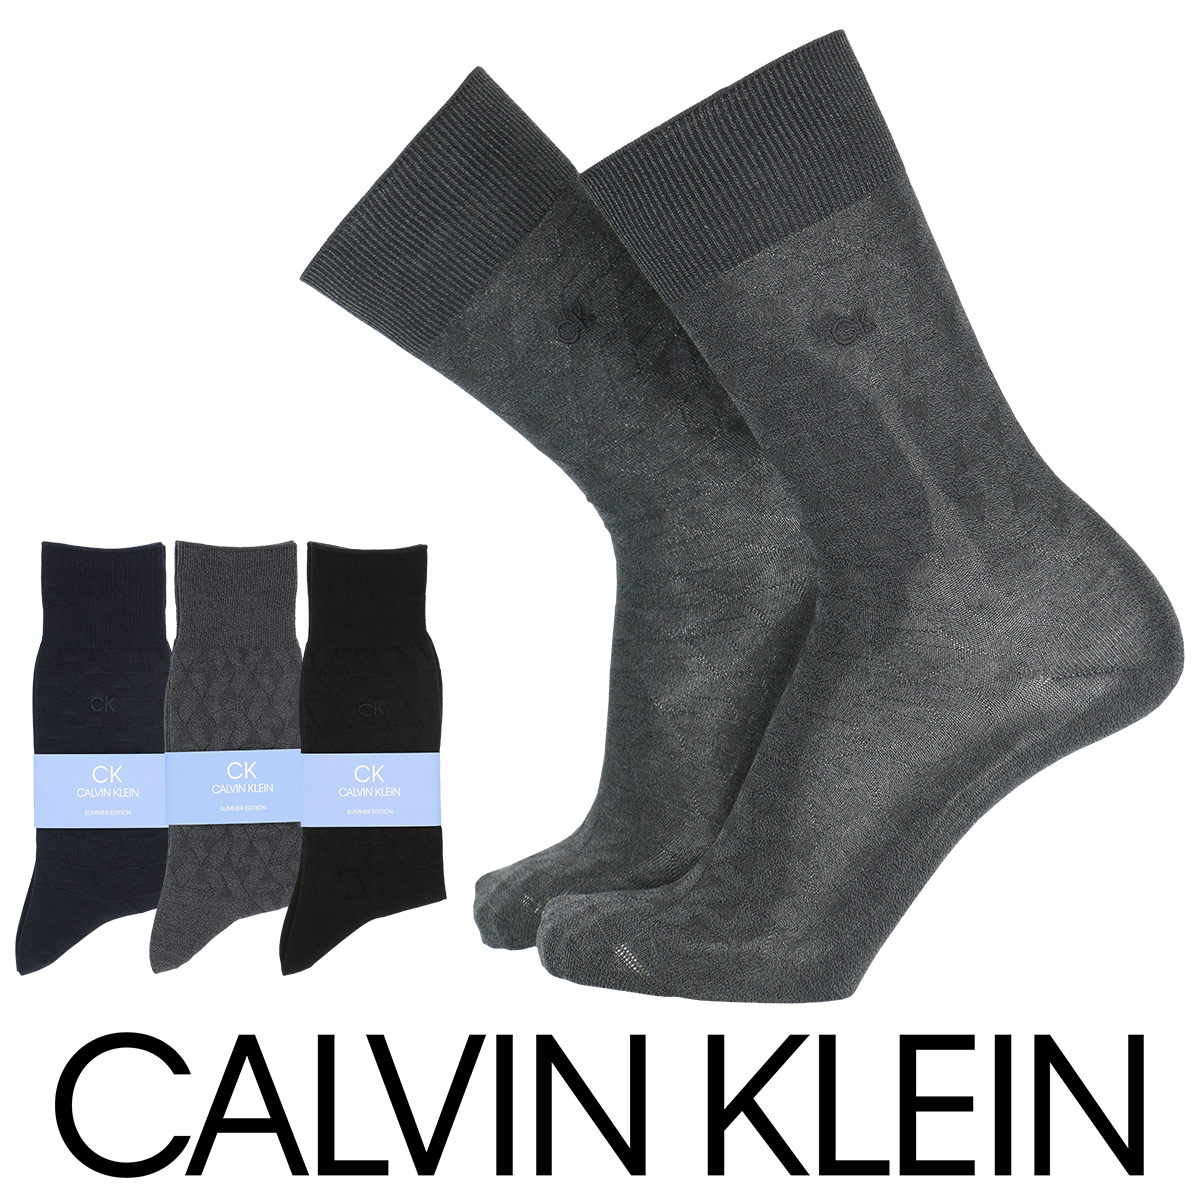 Calvin Klein （ カルバンクライン ）ビジネス ドレス リンクス柄 サマーコットン使用 クルー丈 メンズ 紳士 ソックス 靴下男性 メンズ プレゼント 贈答 ギフト2562-267